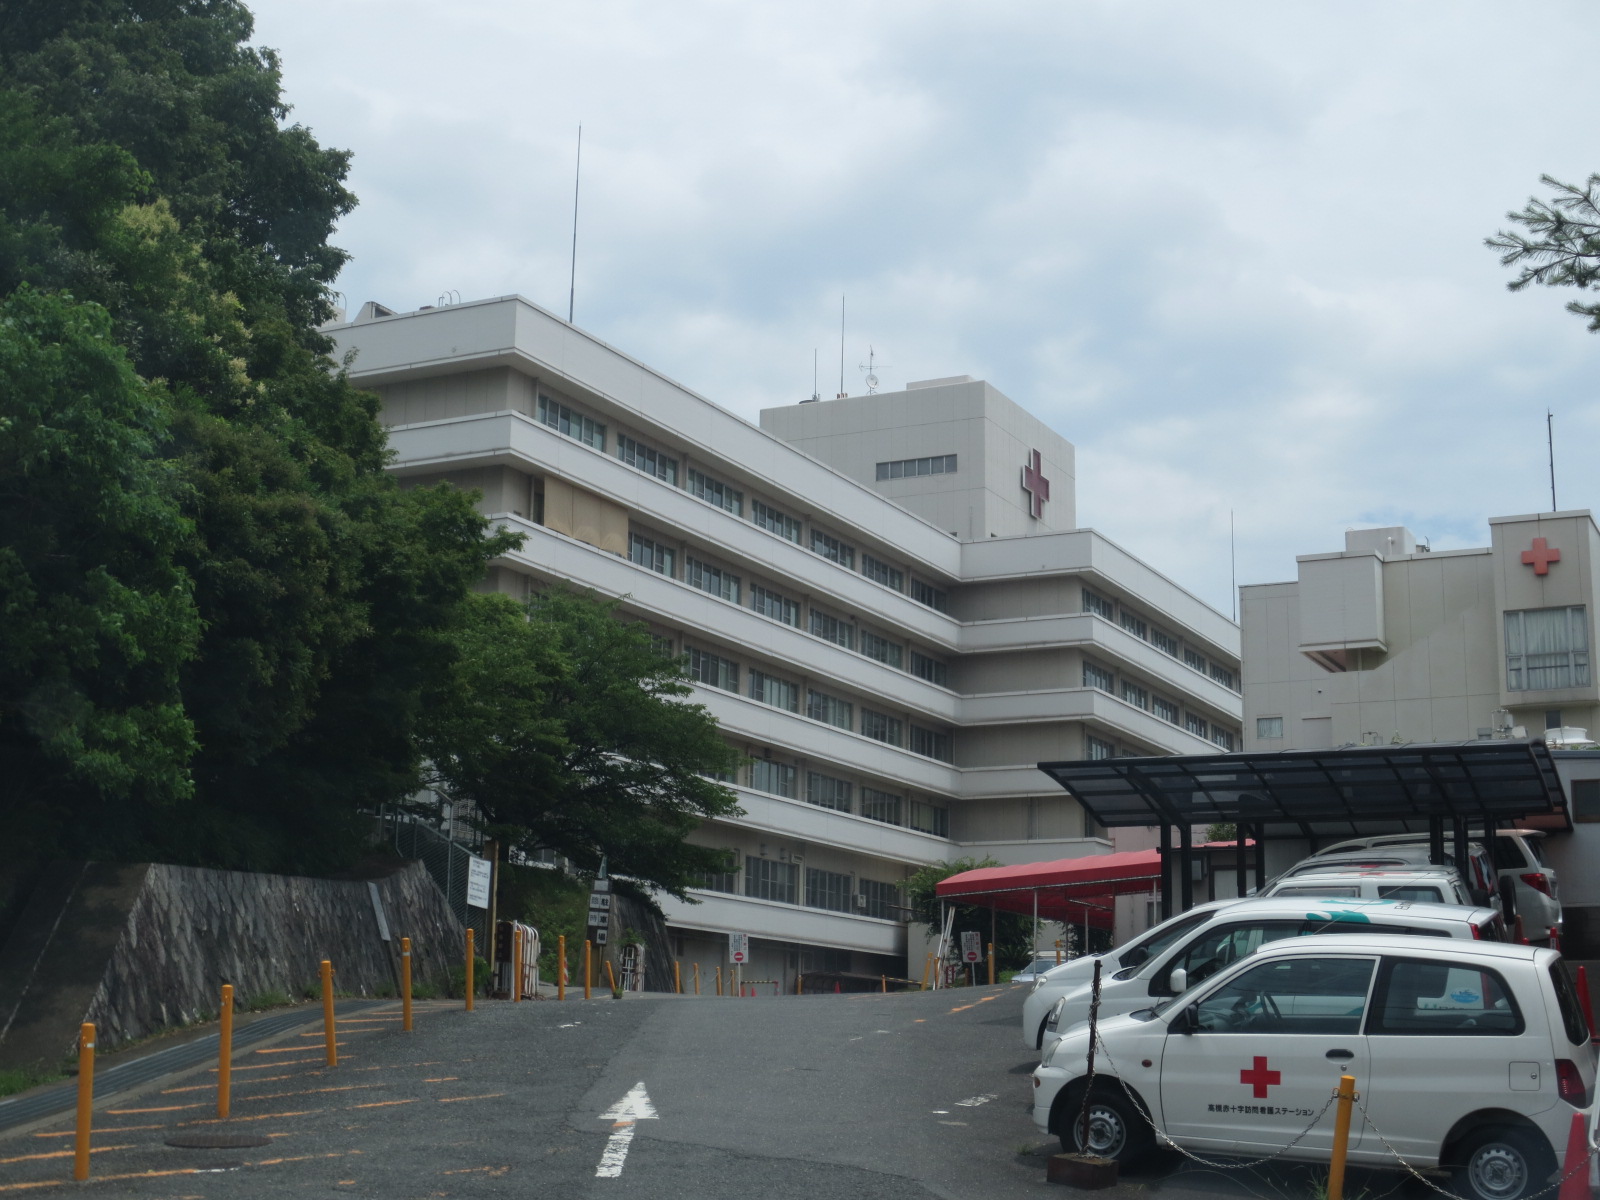 Hospital. Takatsukisekijujibyoin until the (hospital) 1675m